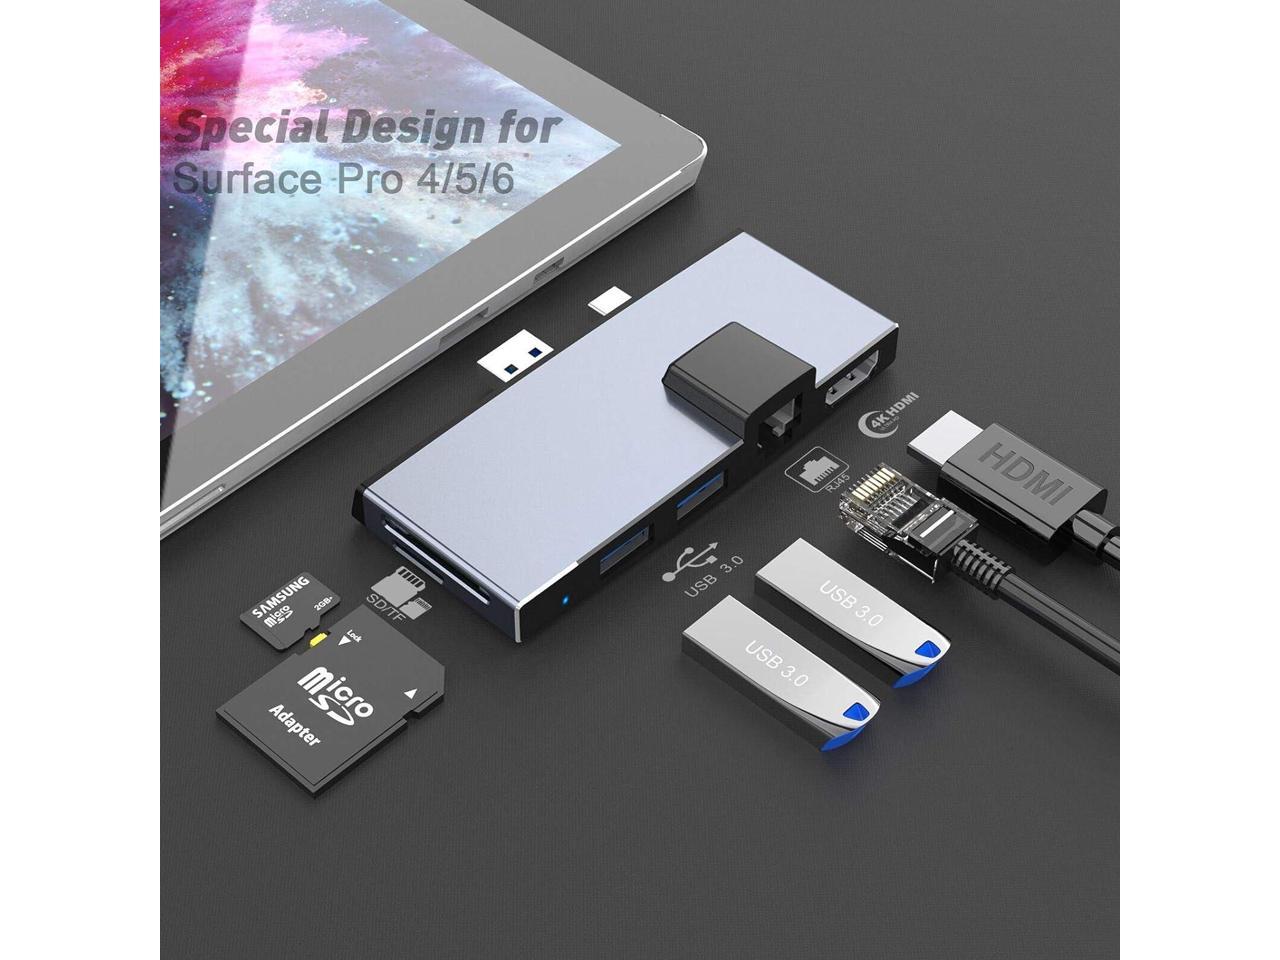 KETAKY Microsoft Surface Pro 5 /Pro 6 USB 3.0 Hub Docking Station with Gigabit 1000Mbps Ethernet Port 4K HDMI SD/Micro SD Card Reader for Surface Pro 2017/2018 2 x USB 3.0 Ports 